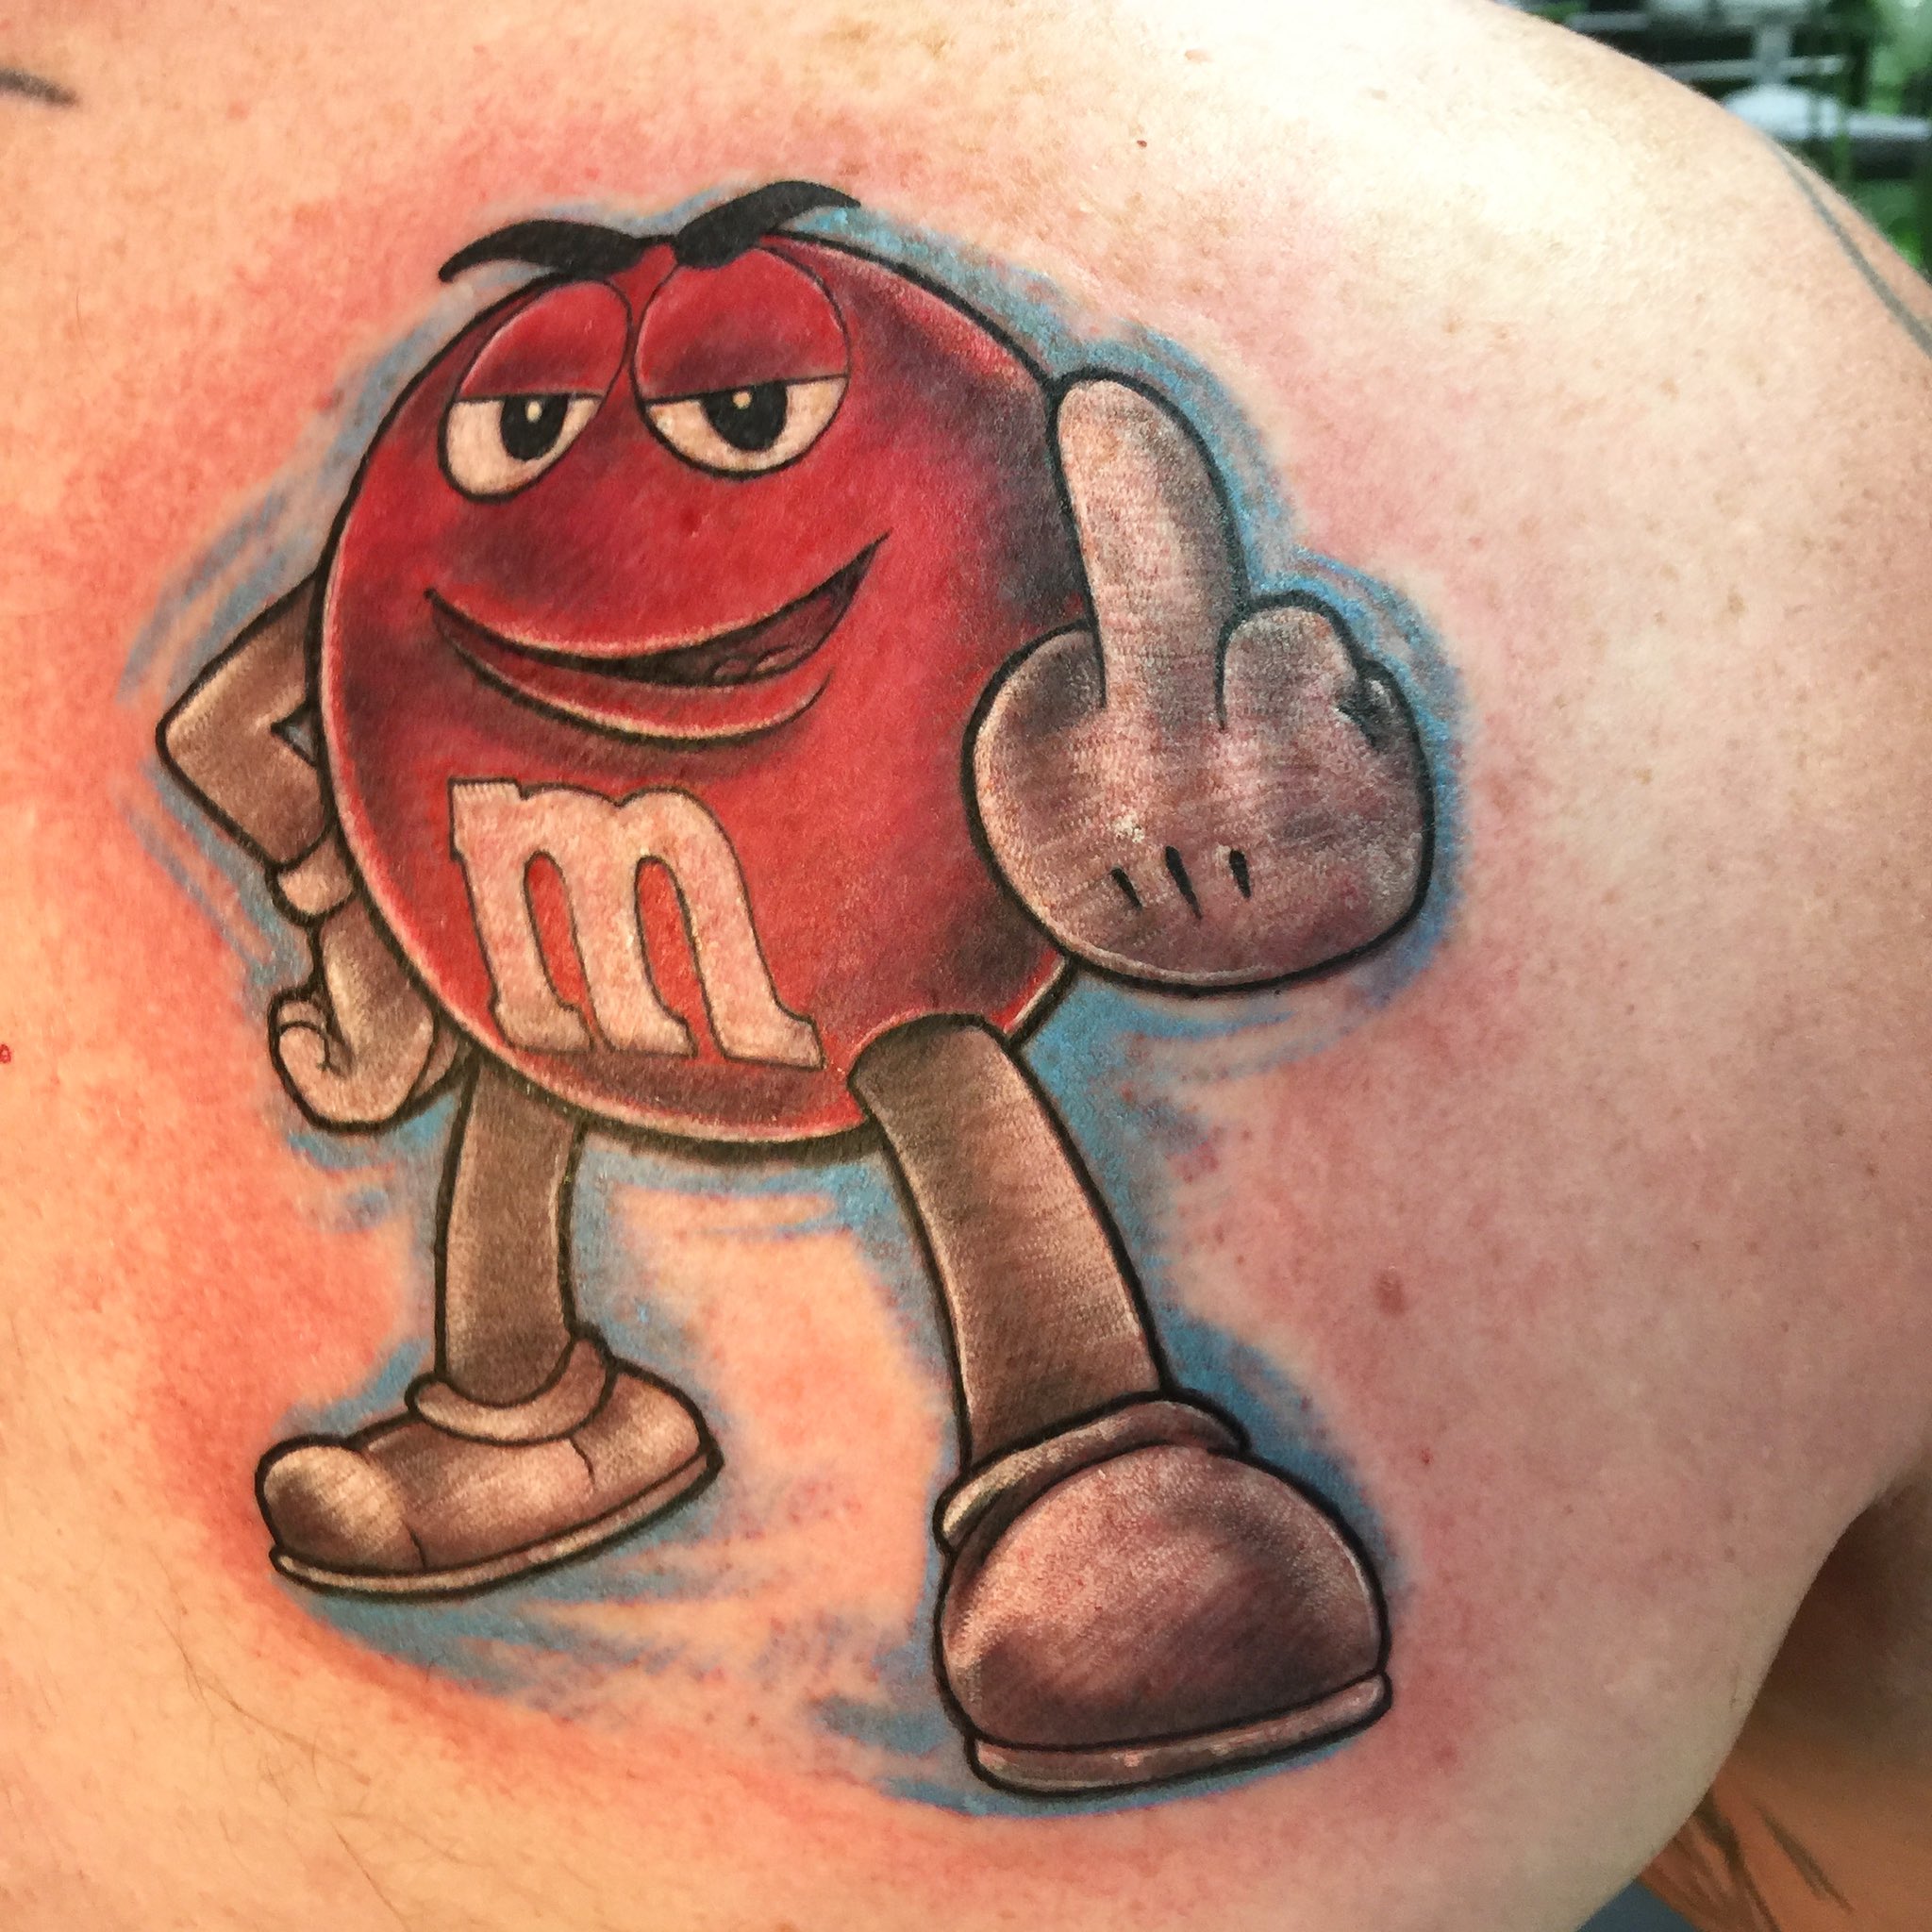 m&m tattooing